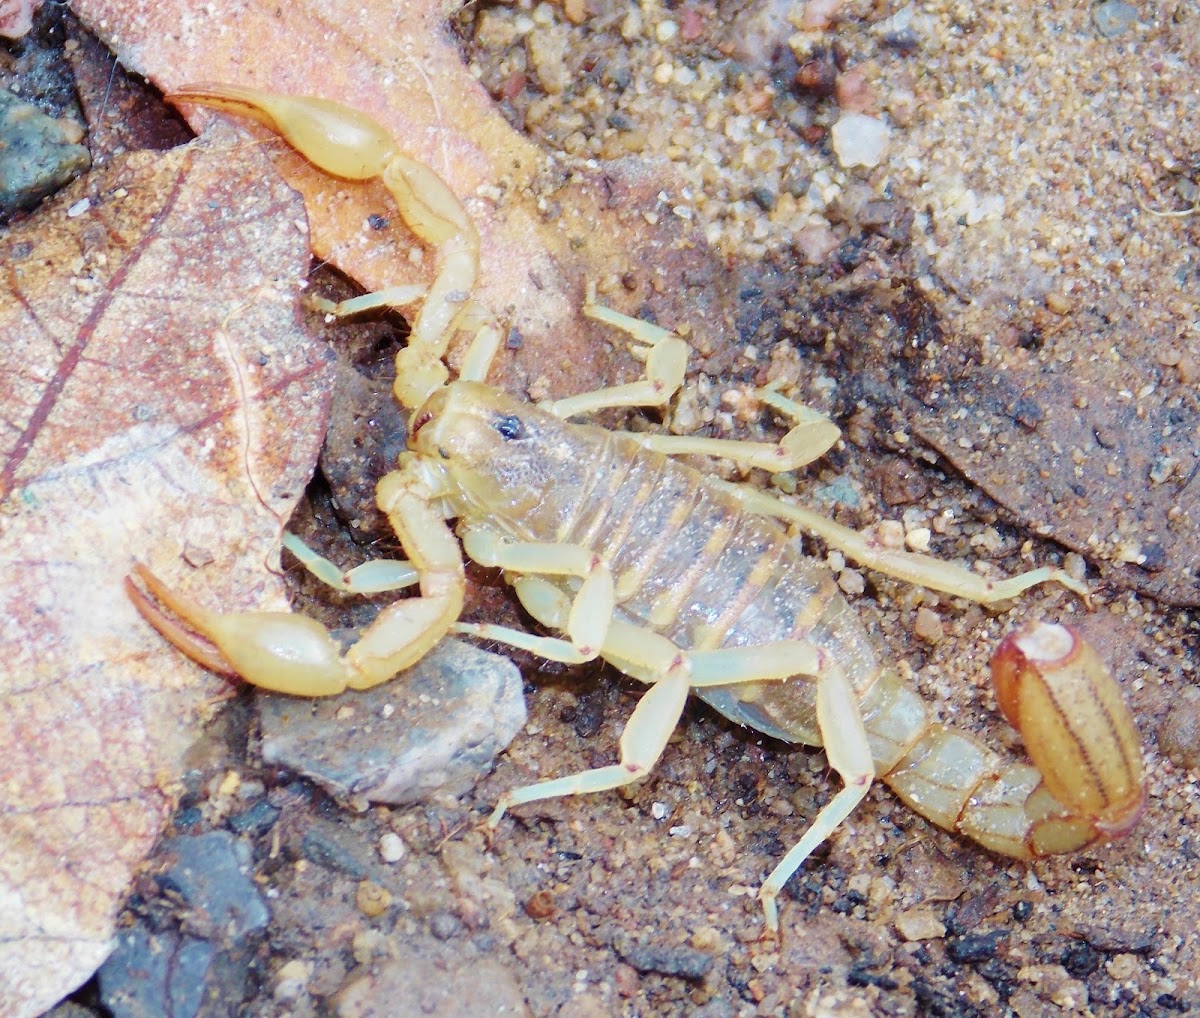 Arizona Striped-tail Scorpion